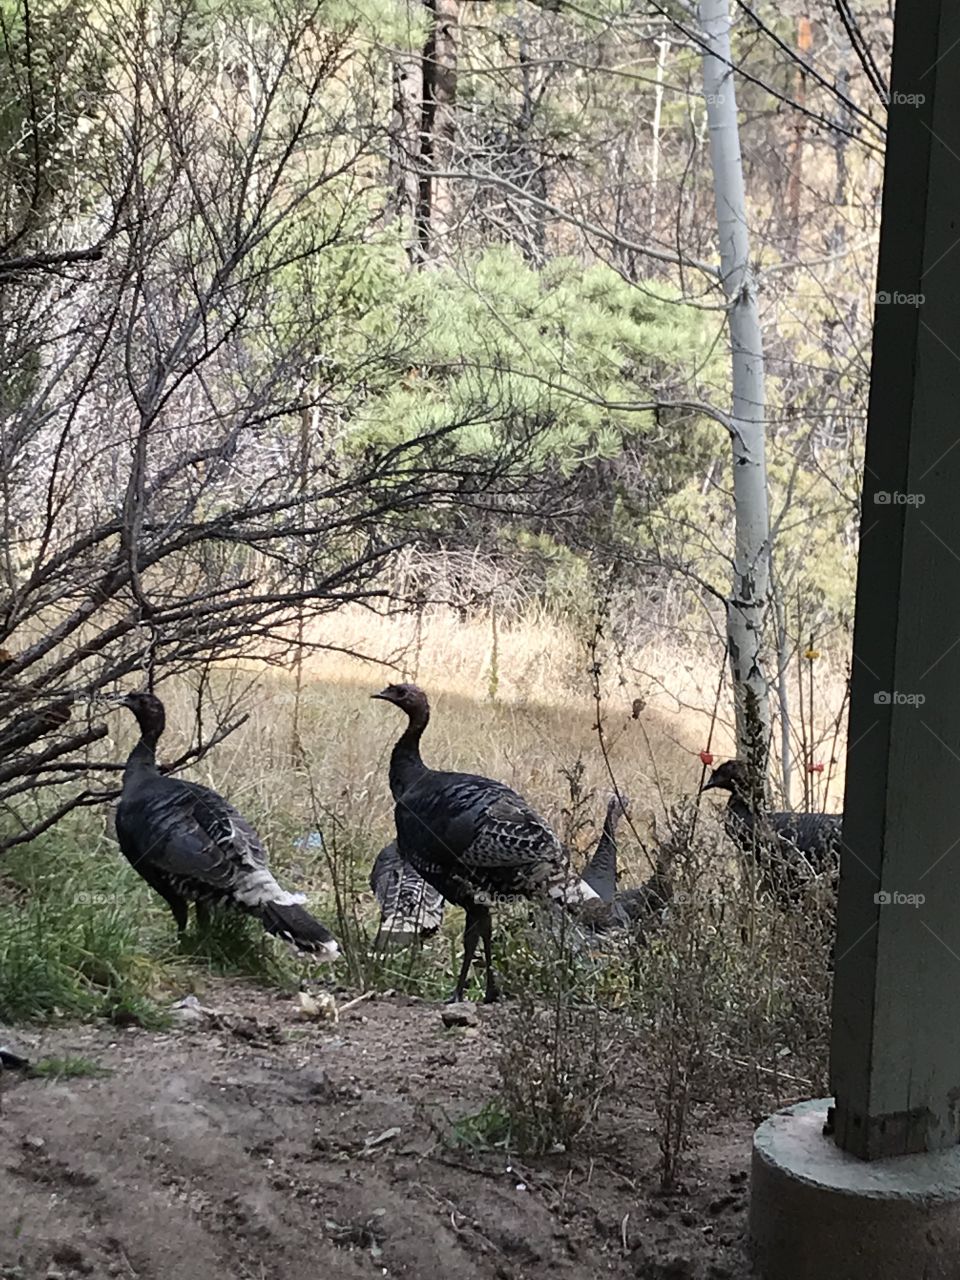 Wild turkeys visiting my yard